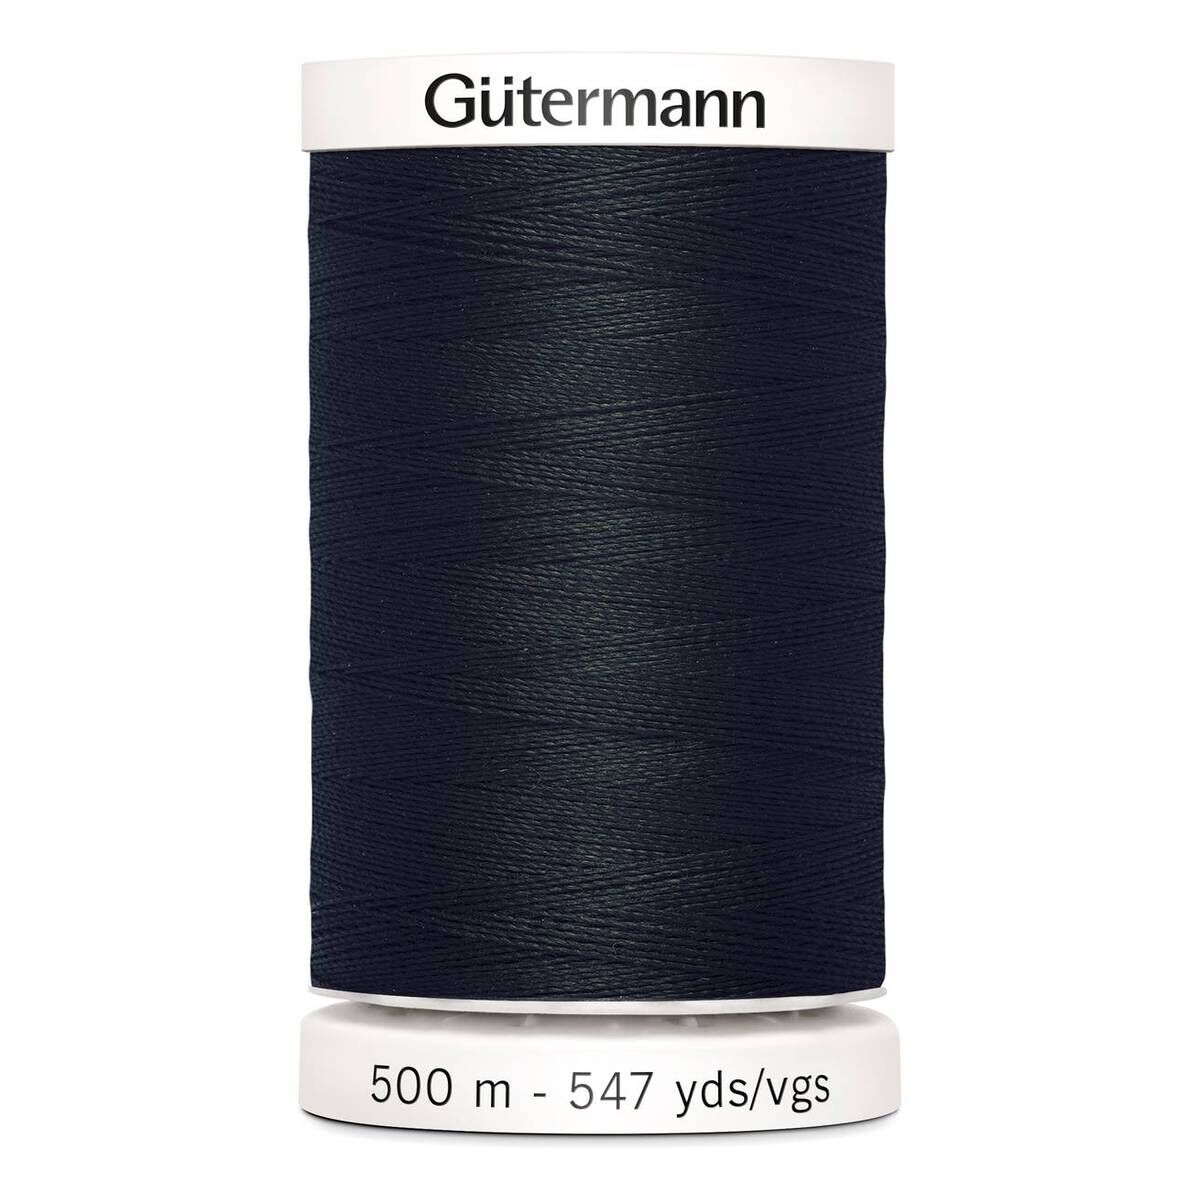 Gutermann Black Sew All Thread 500m (000)